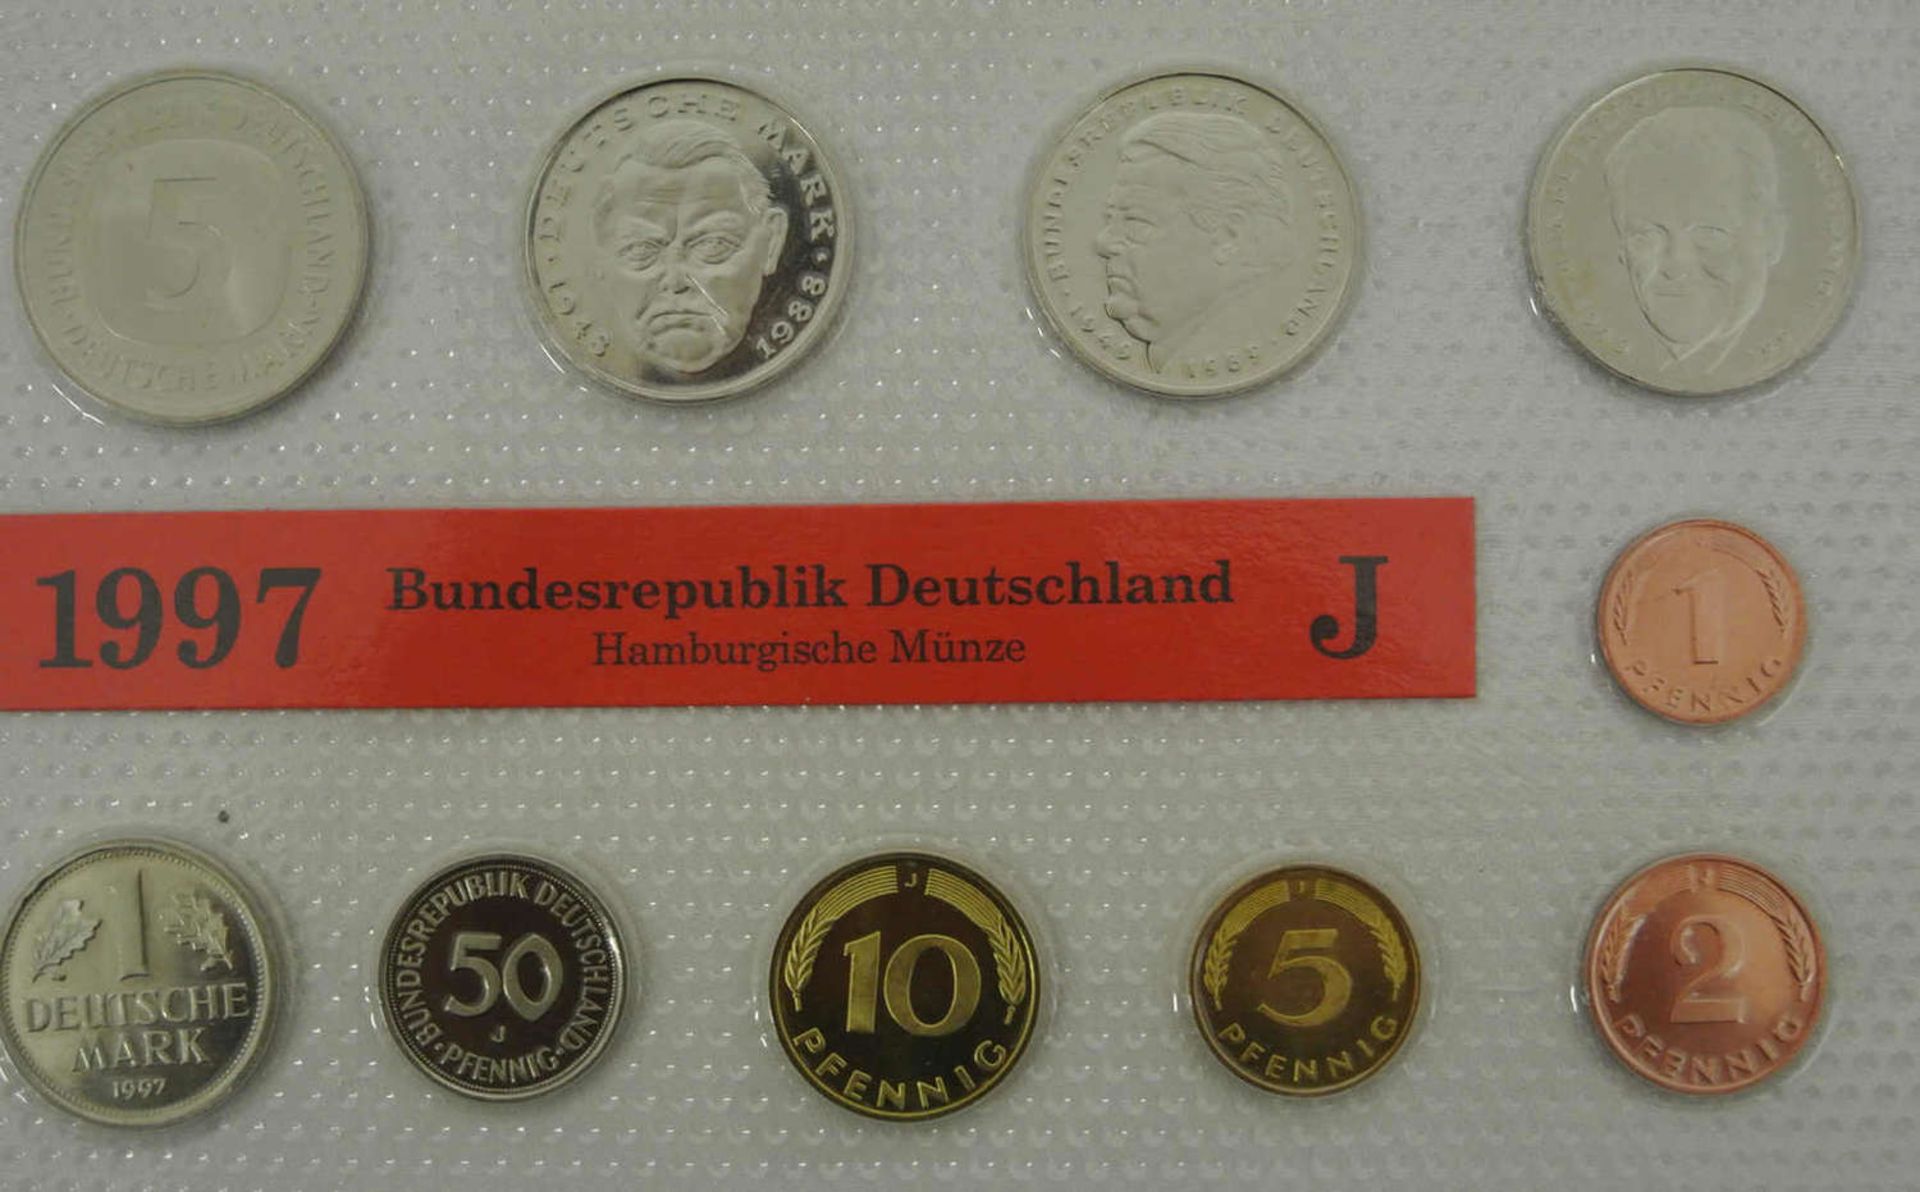 BRD Kursmünzsatz, 1997 A-J, 1 Pfennig - 5 DM, eingeschweißt BRD course coin set, 1997 A-J, 1 Pfennig - Image 2 of 2